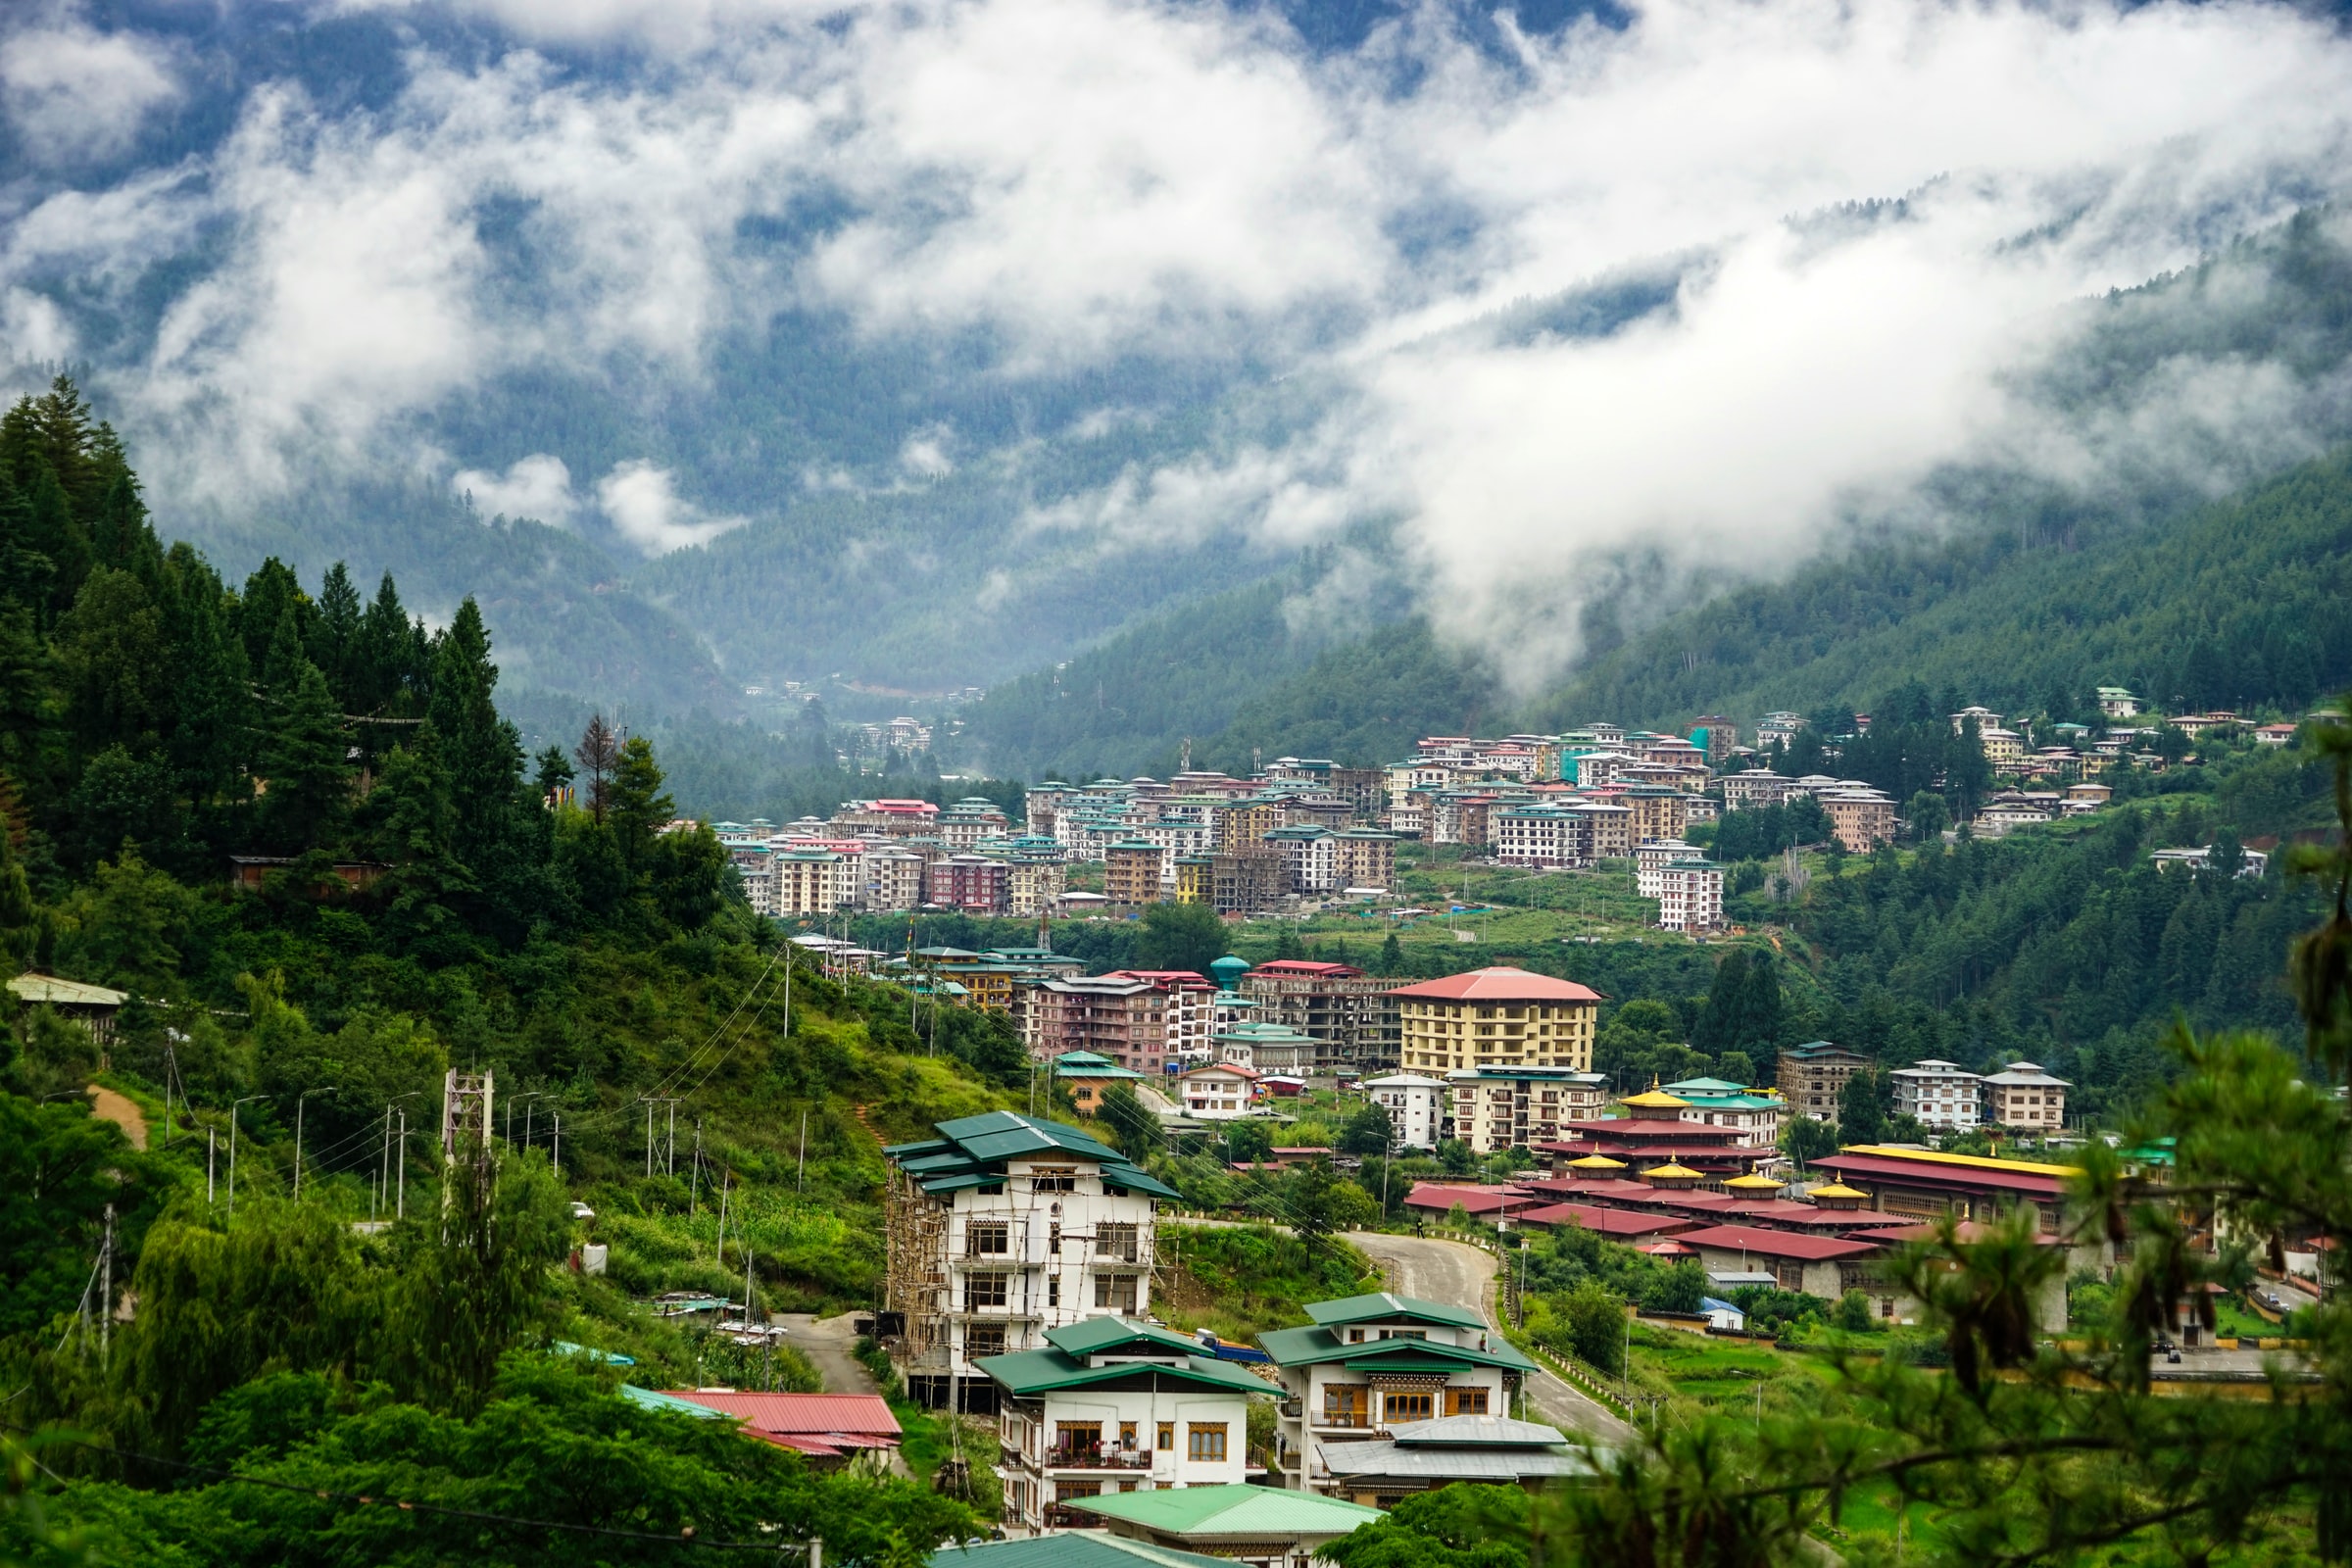 Thimpu (Bhutan), Land Pooling and Planned Development | Photo by: Pema Gyamtsho on Unsplash